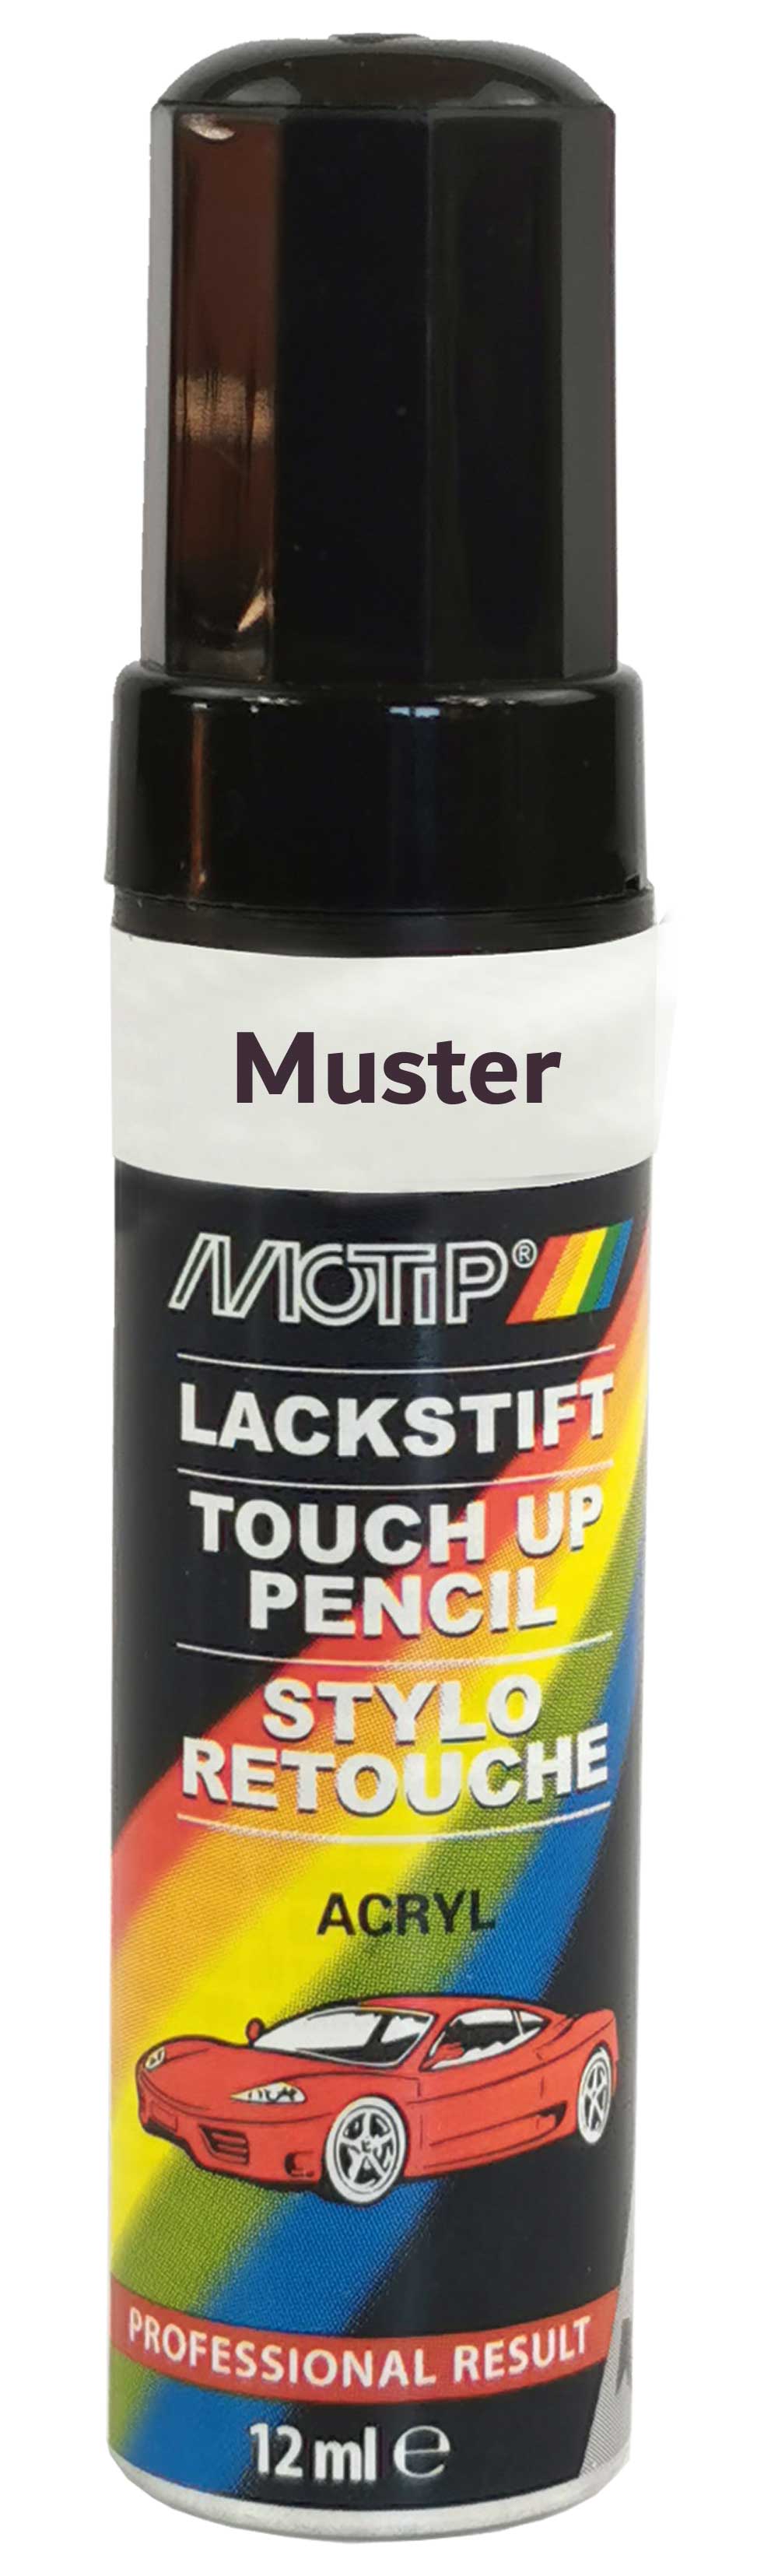 Motip Lack-Stift grau 12ml 951077